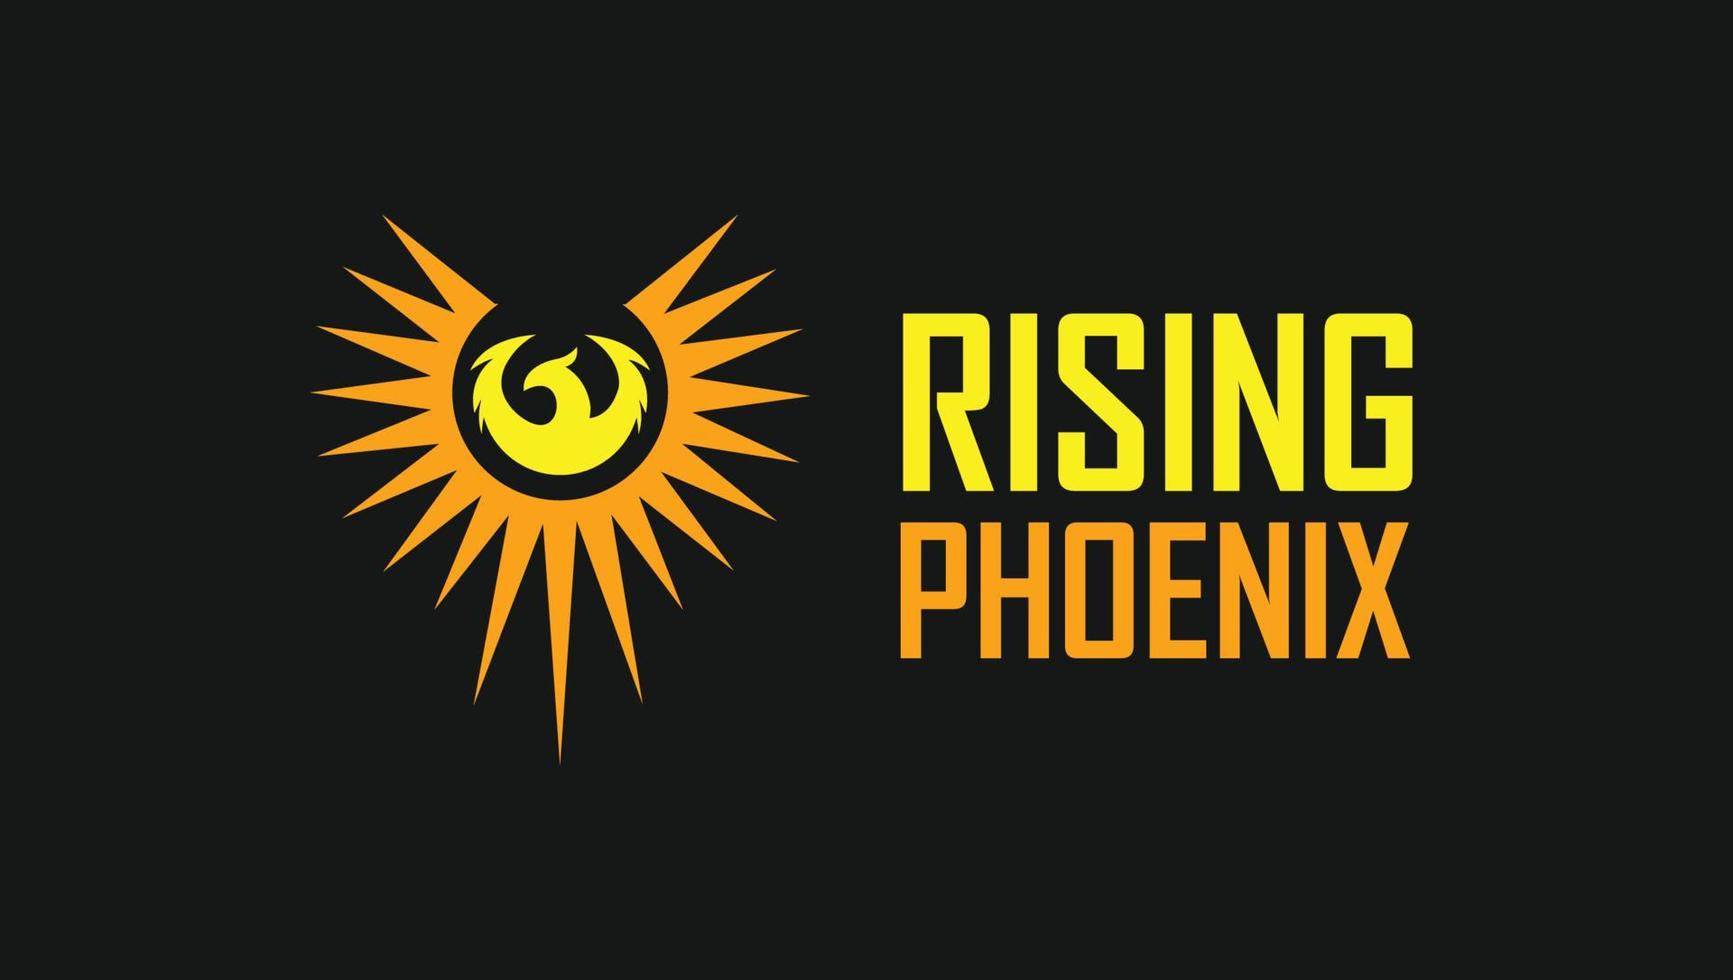 Rising Phoenix Modern Logo Design template vector